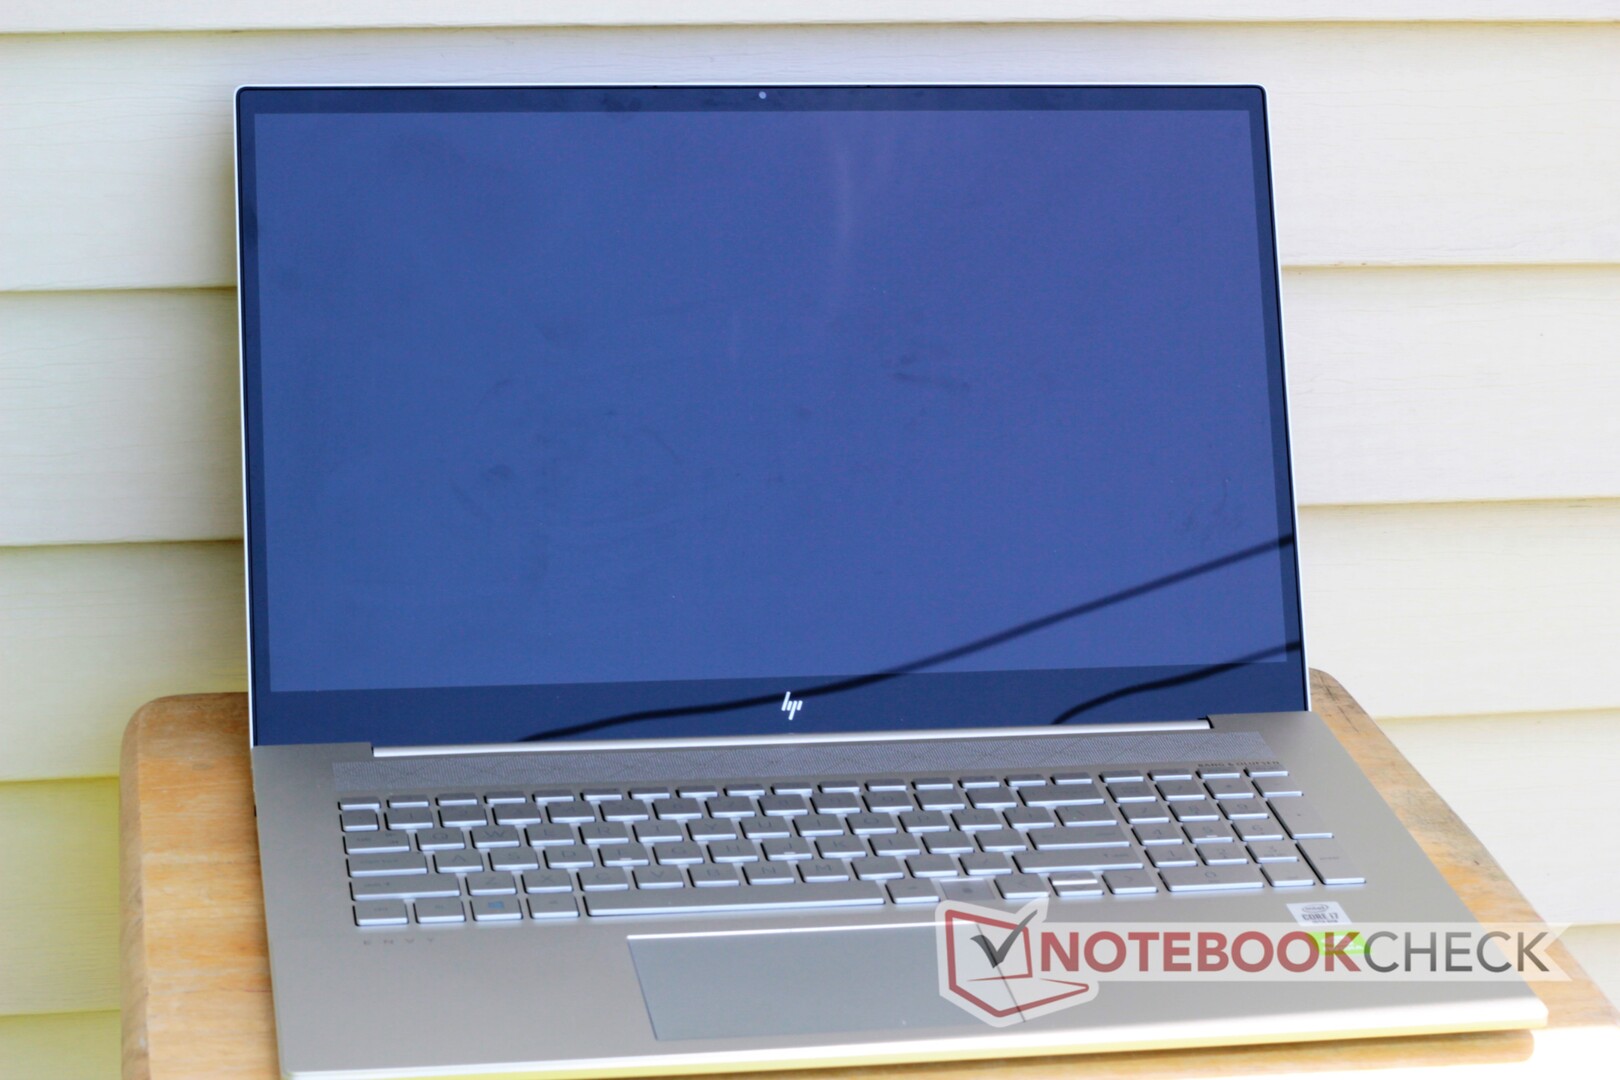 MacBook Pro-like HP Envy 17 with 11th gen Core i7 CPU, 1080p 